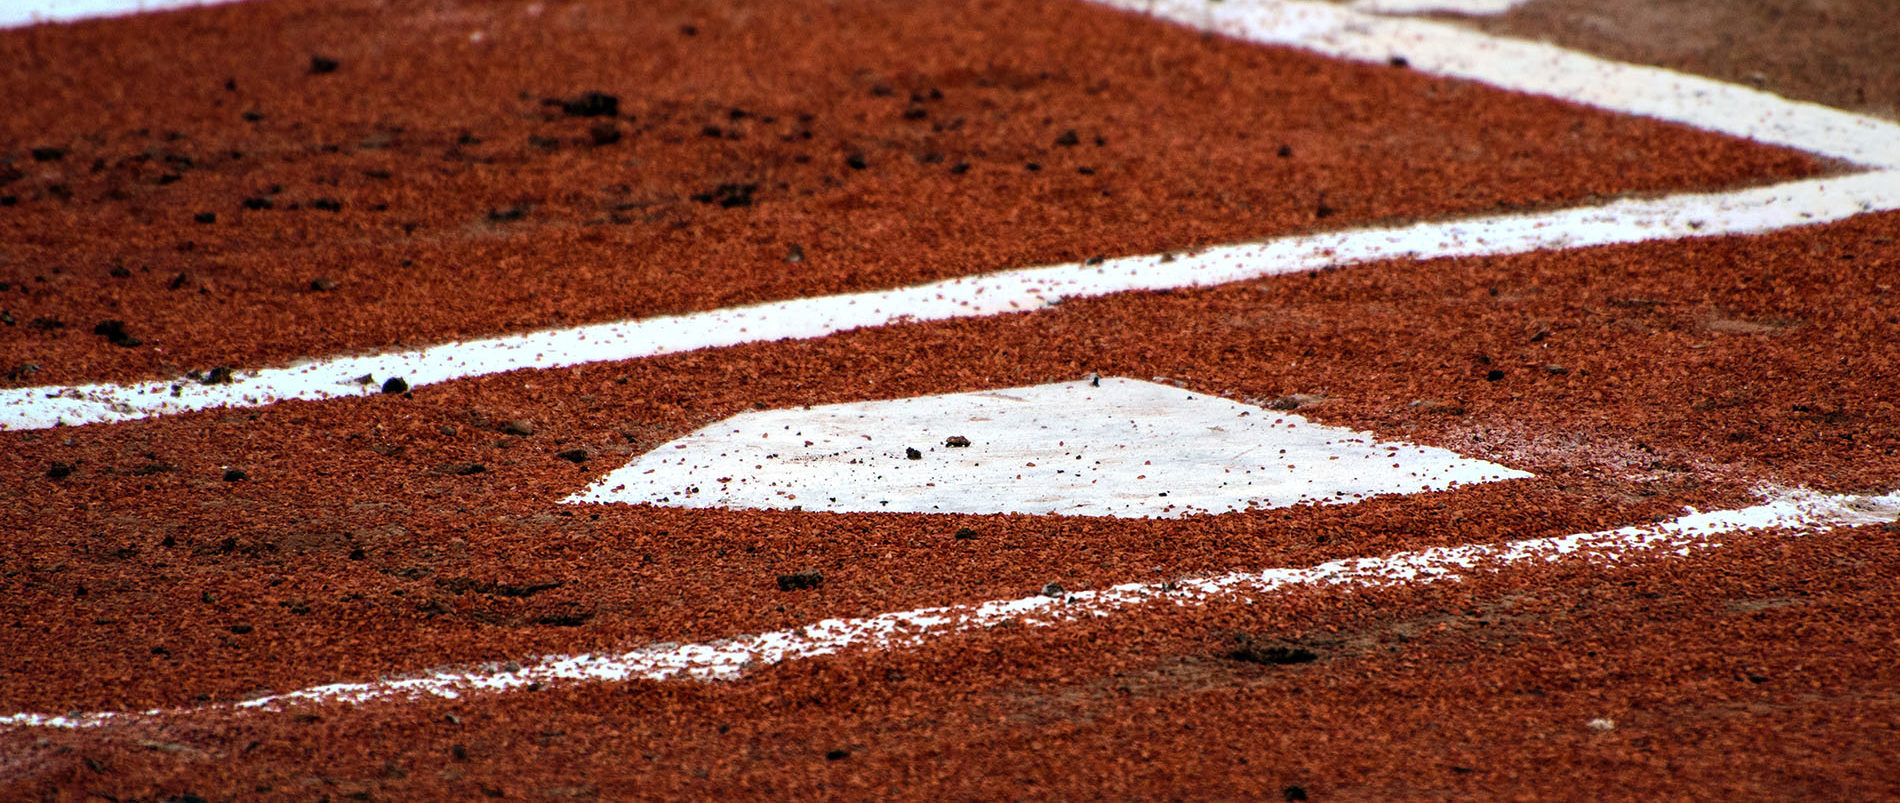 Home plate in a baseball field.